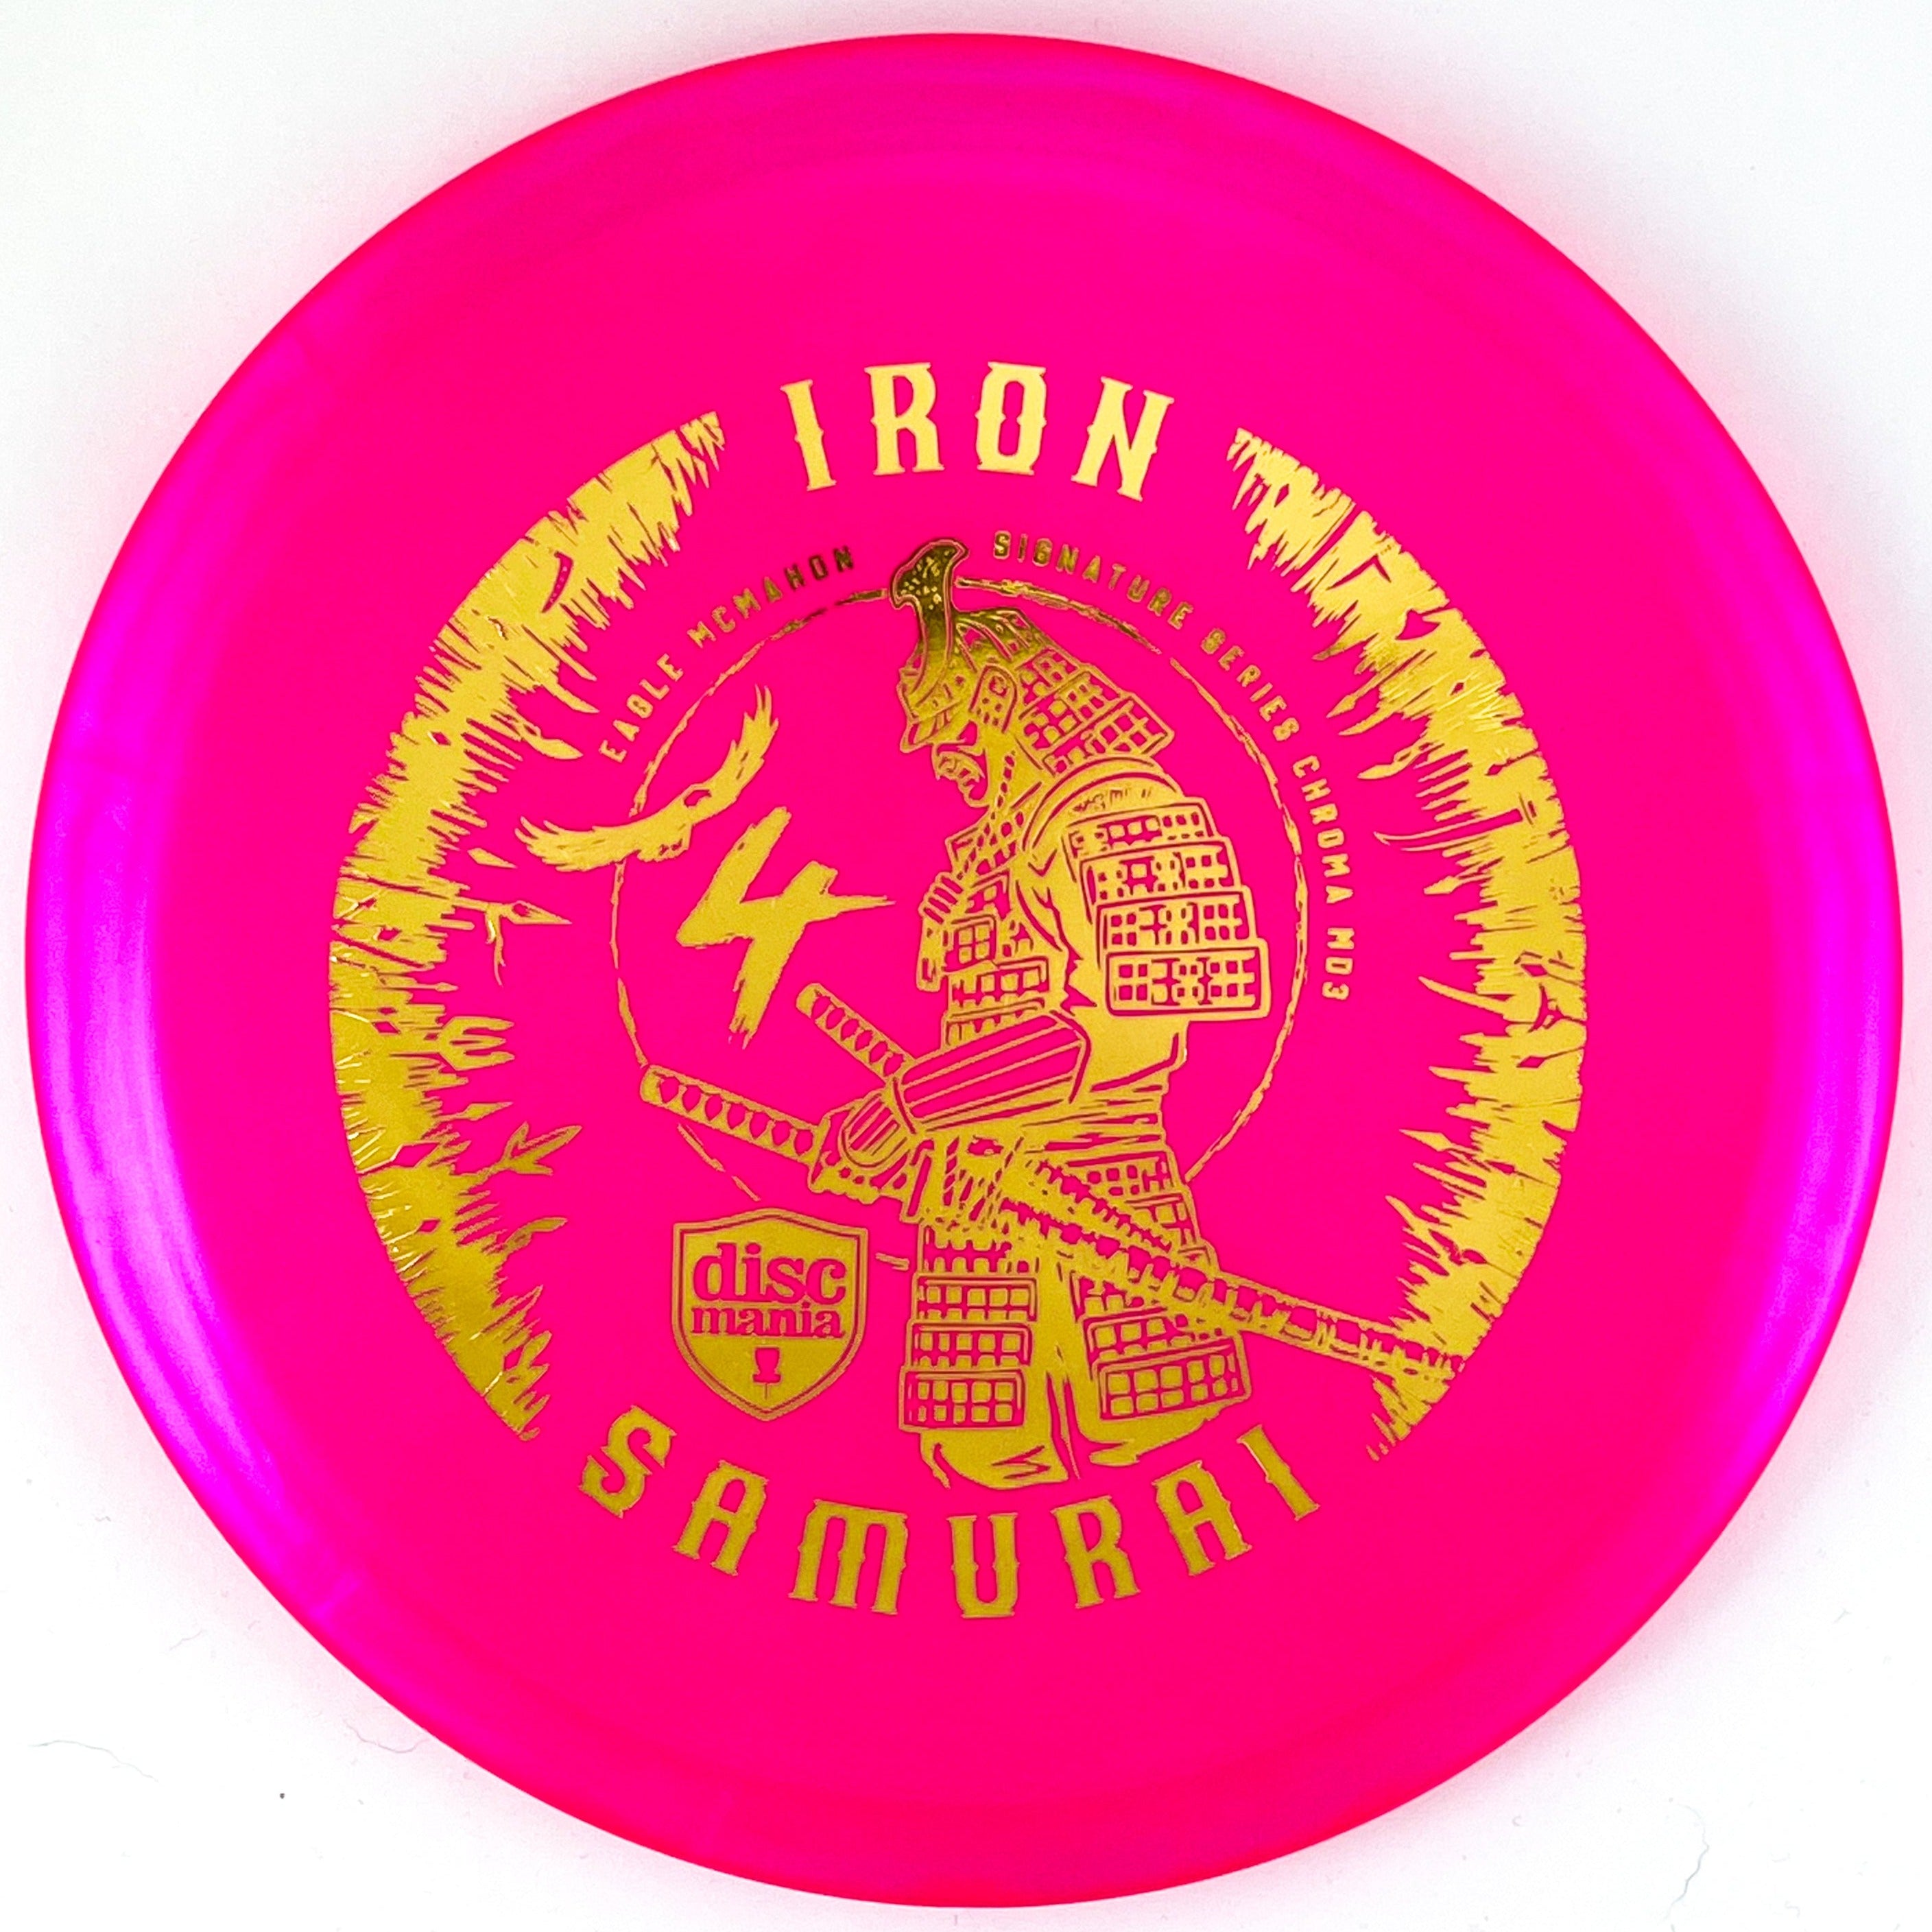 Pink Eagle McMahon Signiture Series Iron Samurai 4 Chroma MD3 disc golf midrange disc by Discmania Golf Discs.